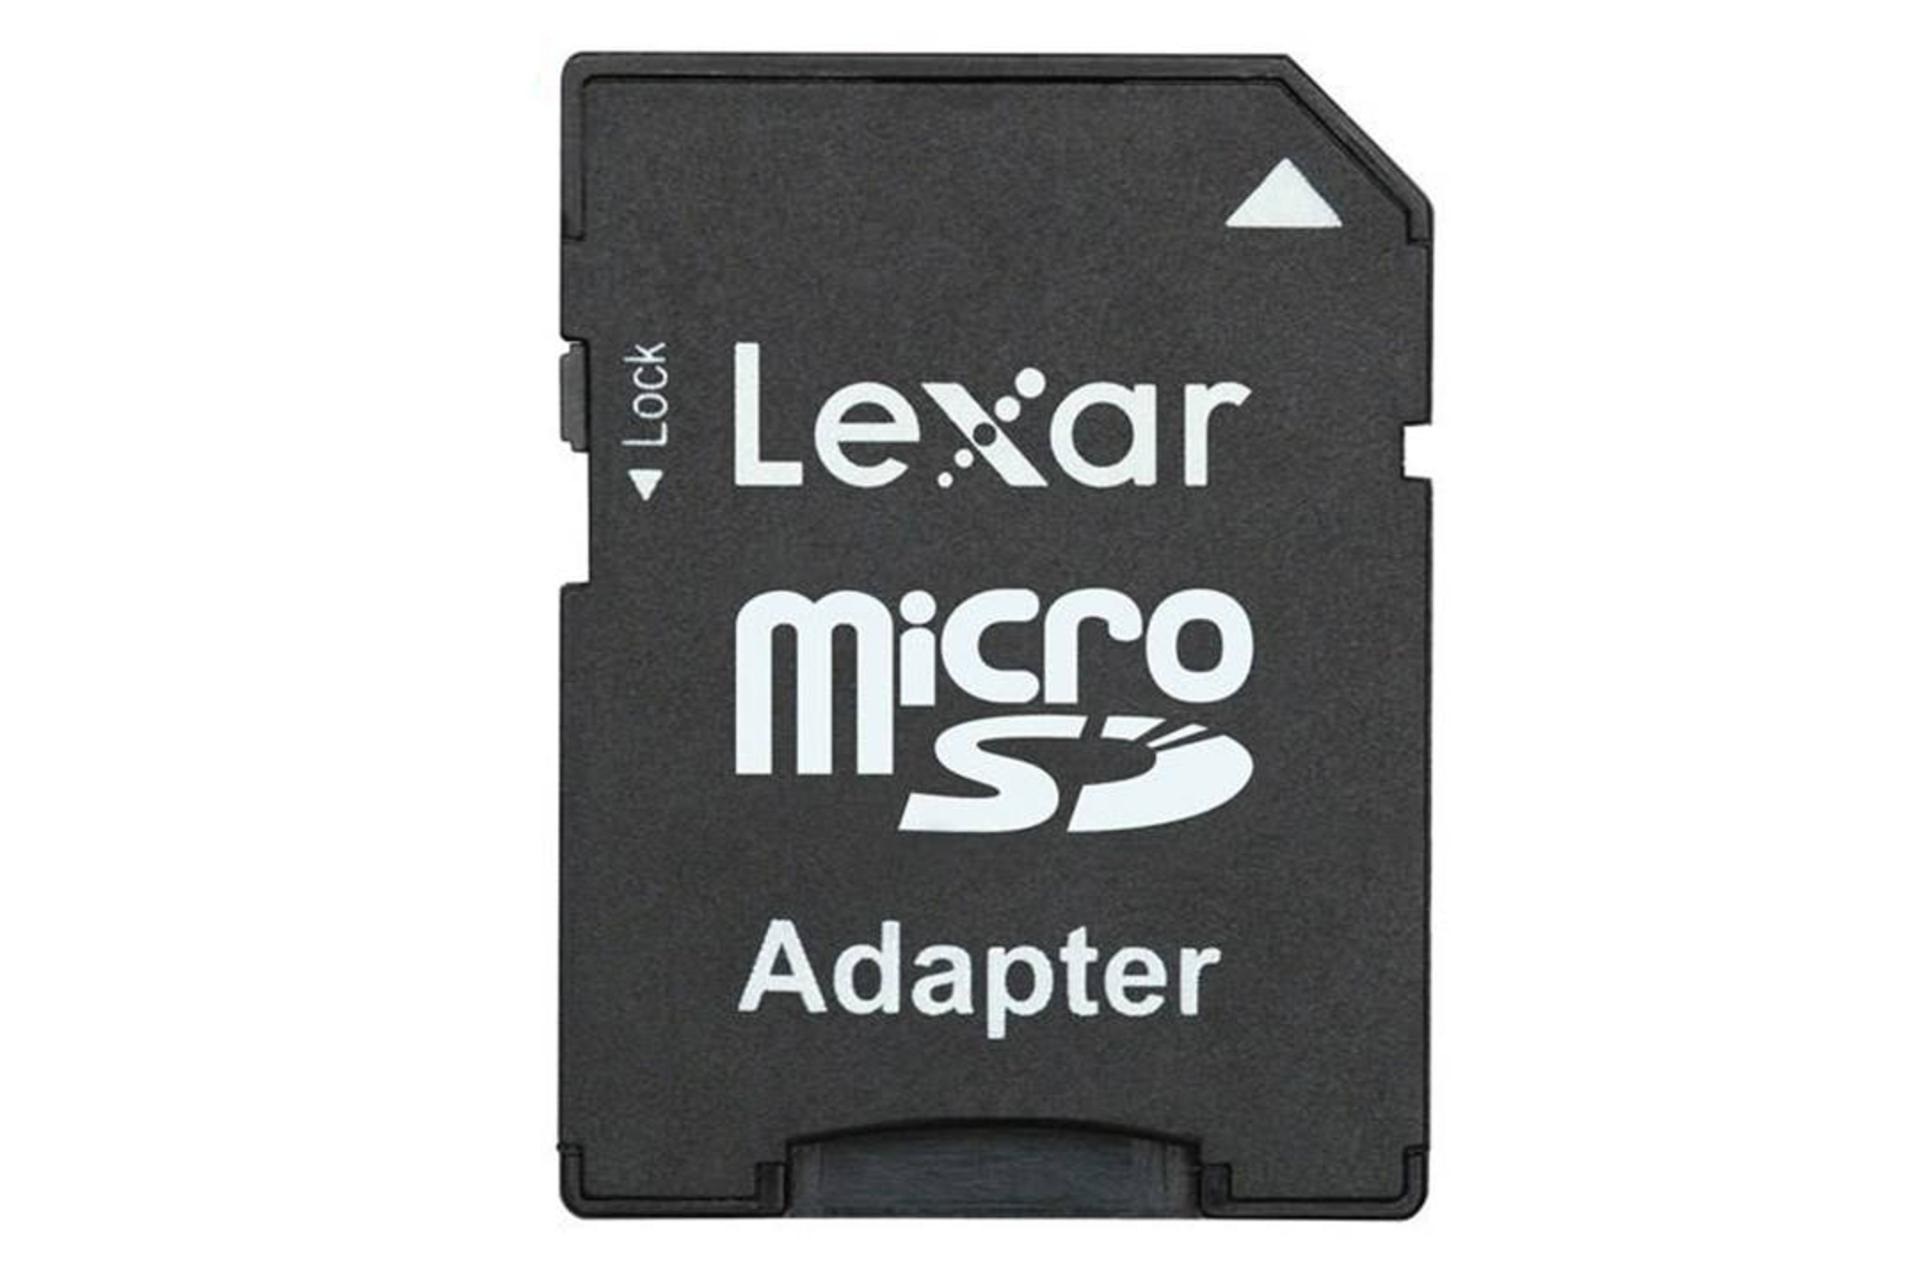 Lexar microSDHC Class 10 16GB